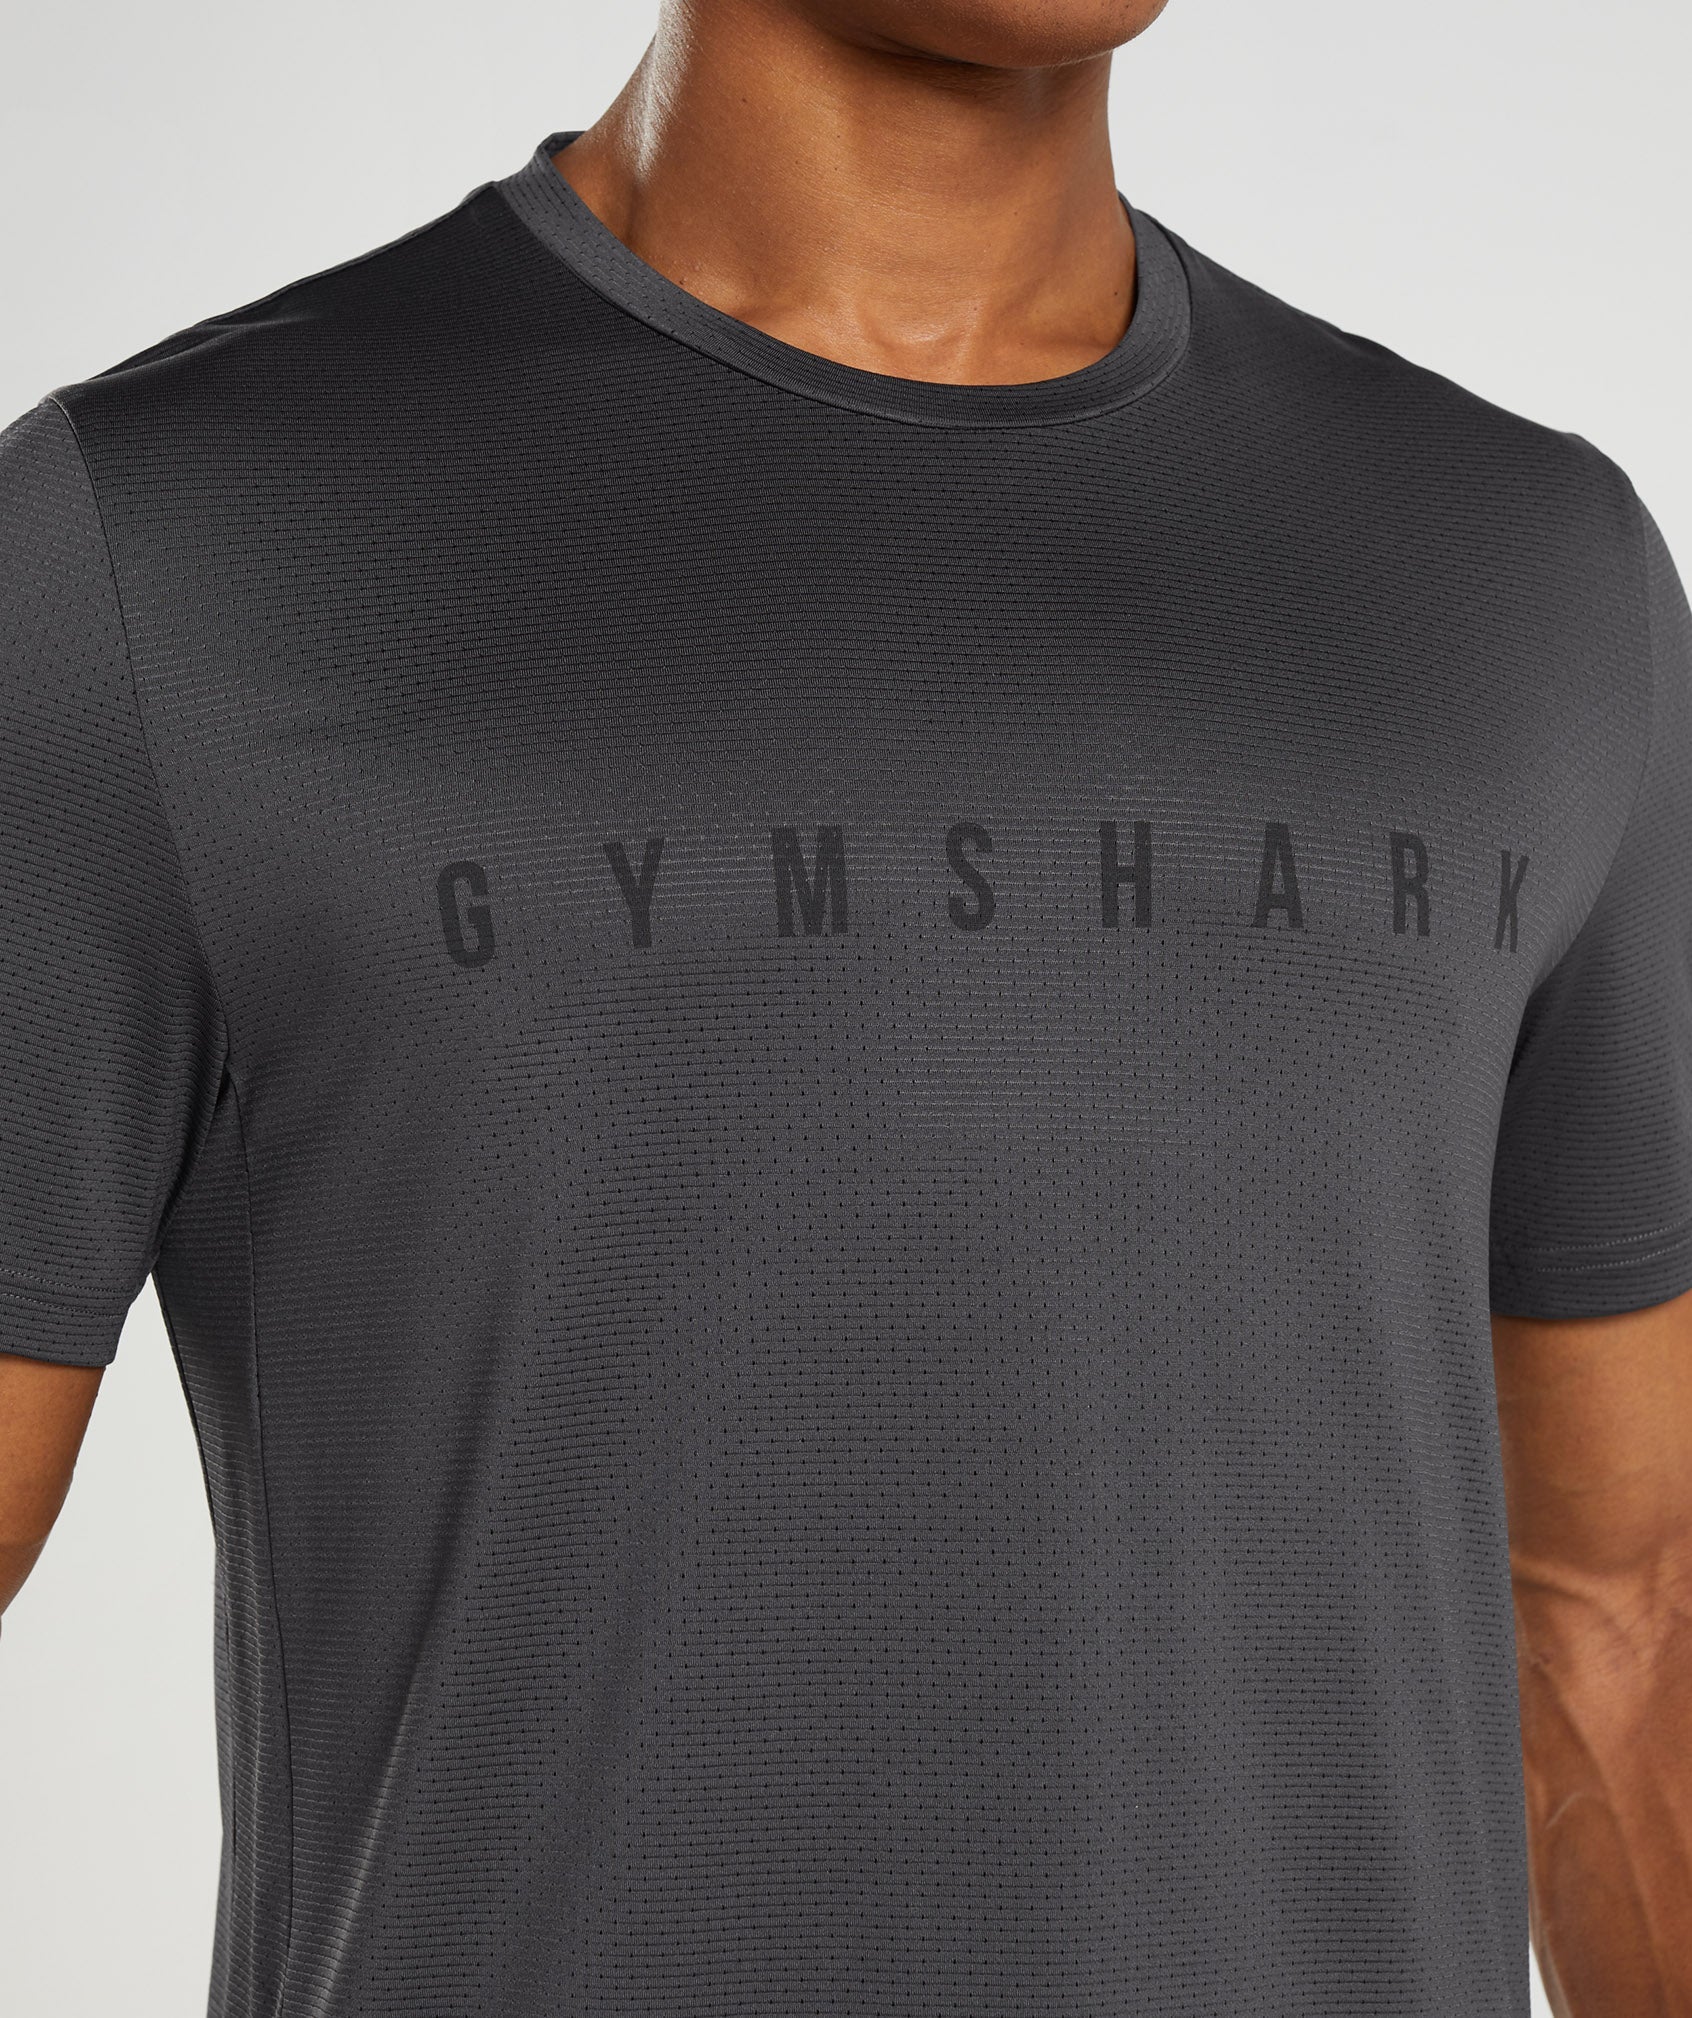 Martin Page on X: My new @Gymshark #onyx t-shirt